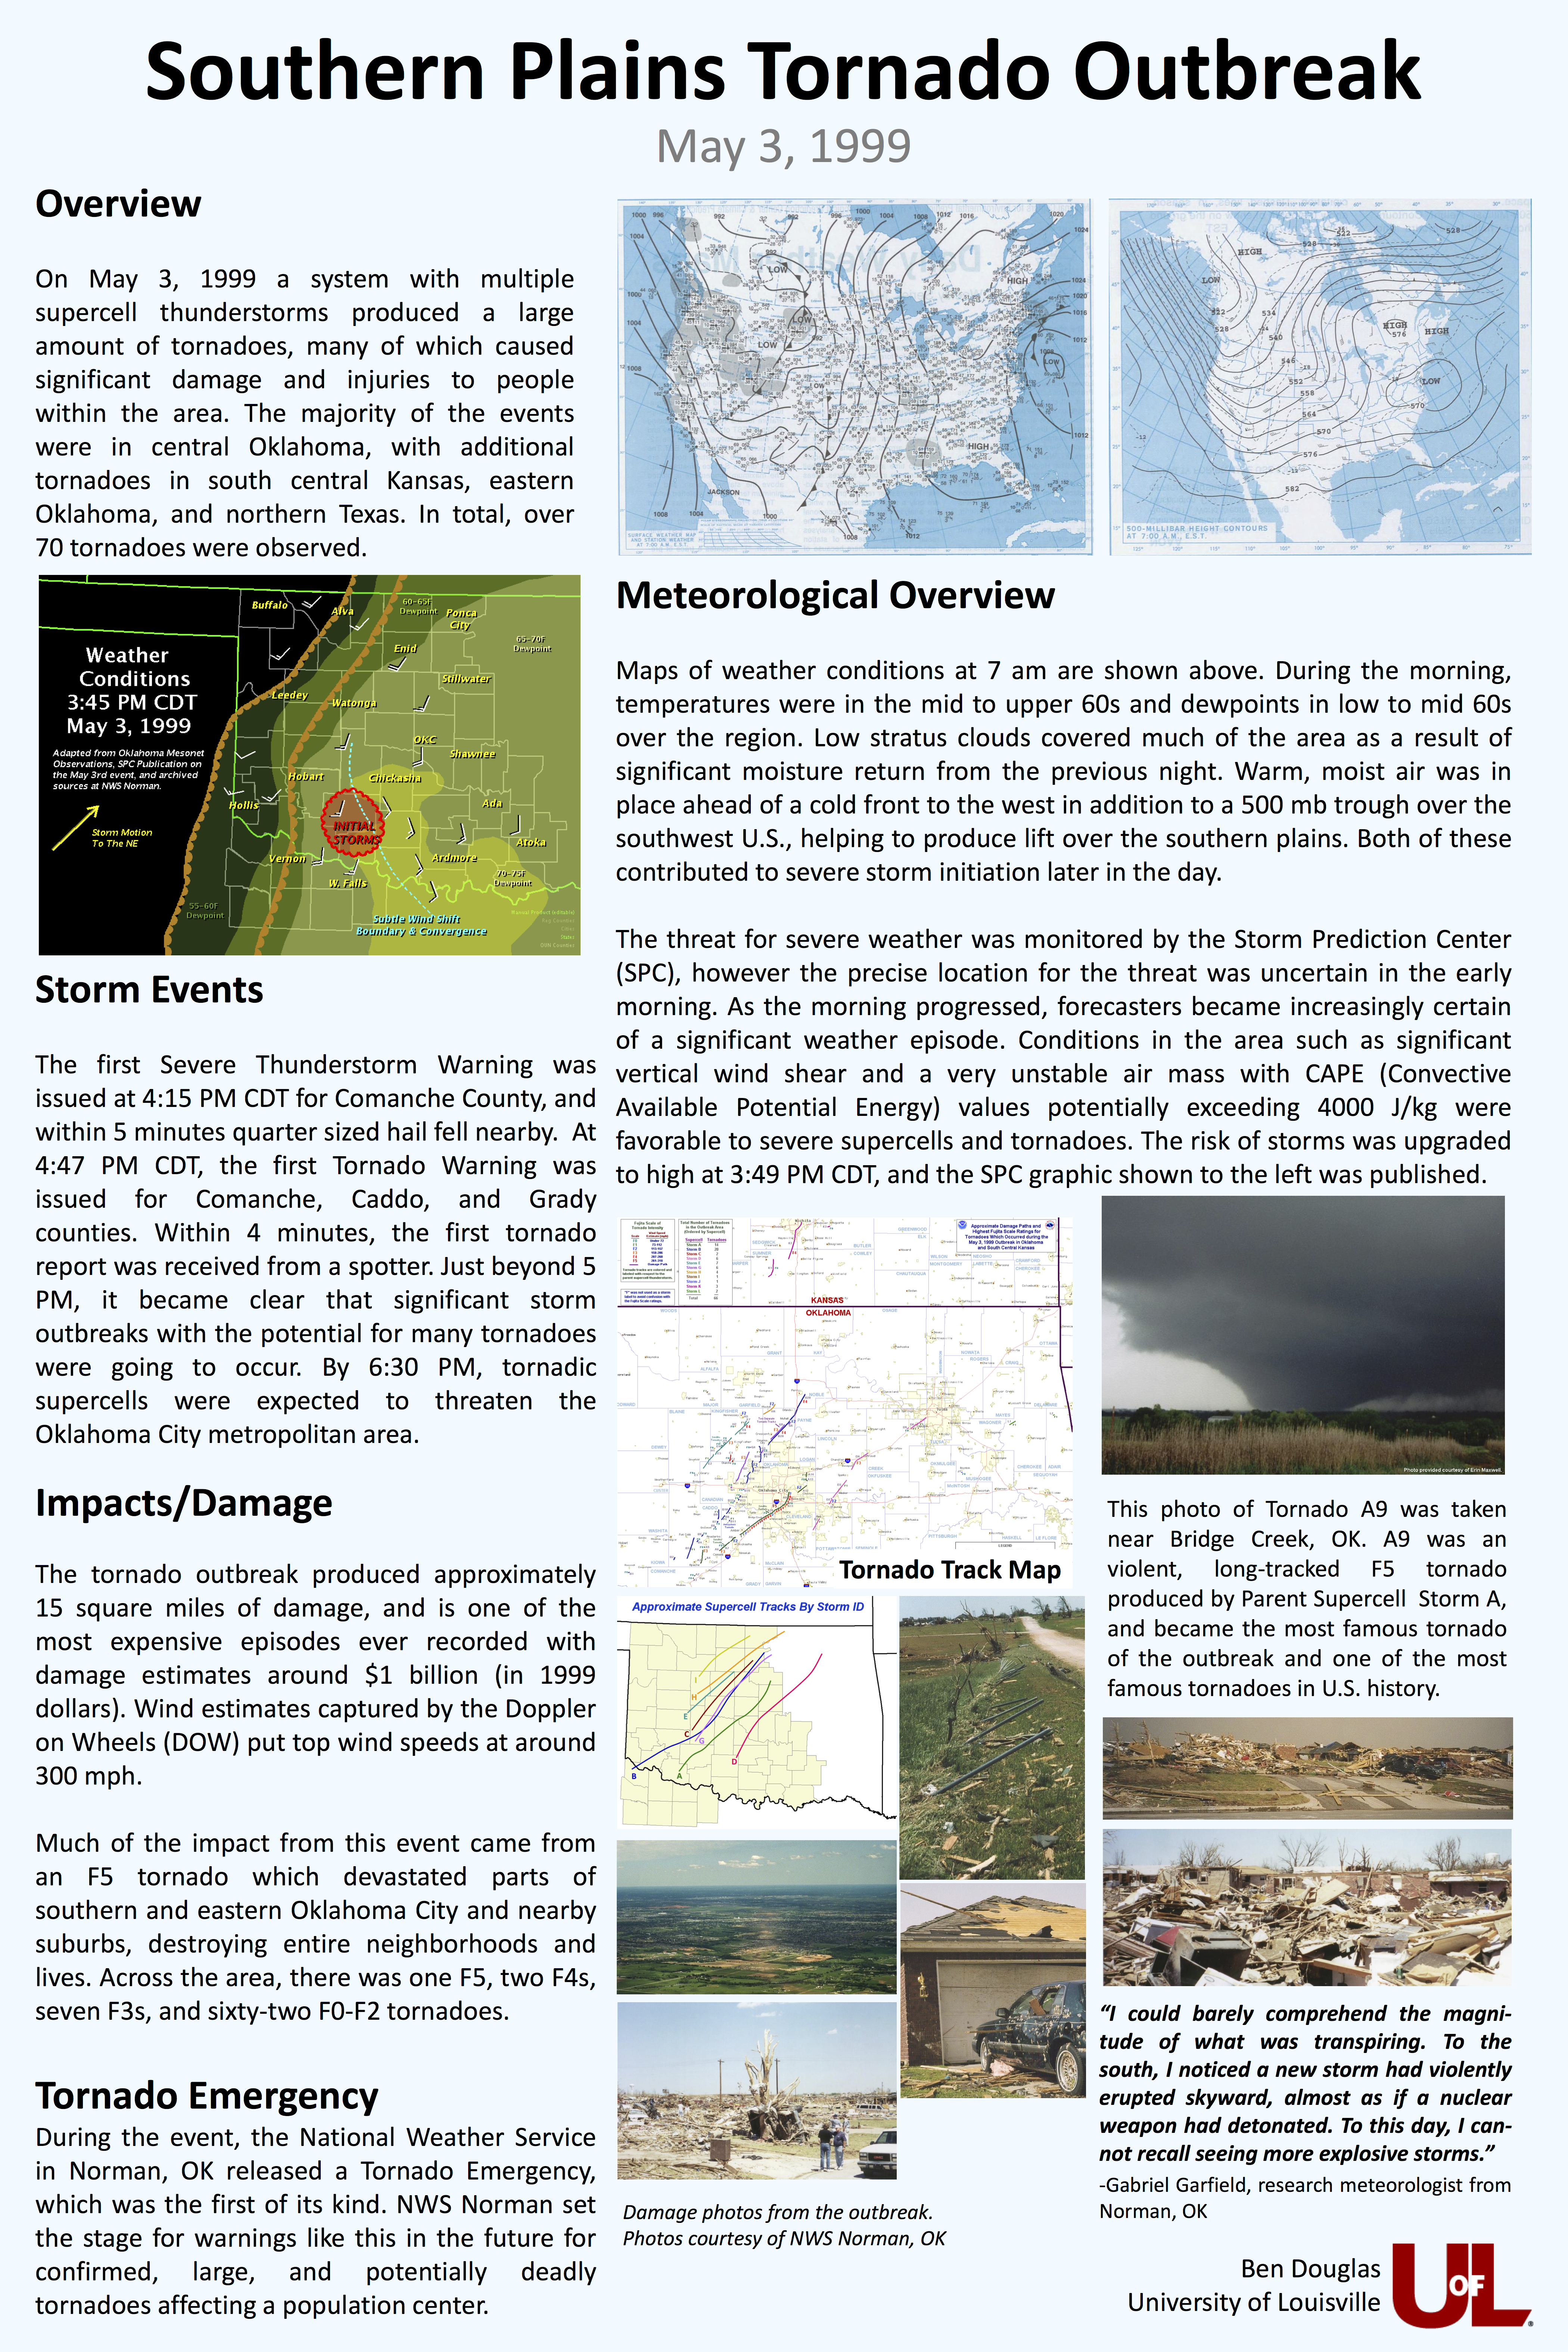 Poster by Benjamin Douglas about Southern Plains Tornado Outbreak